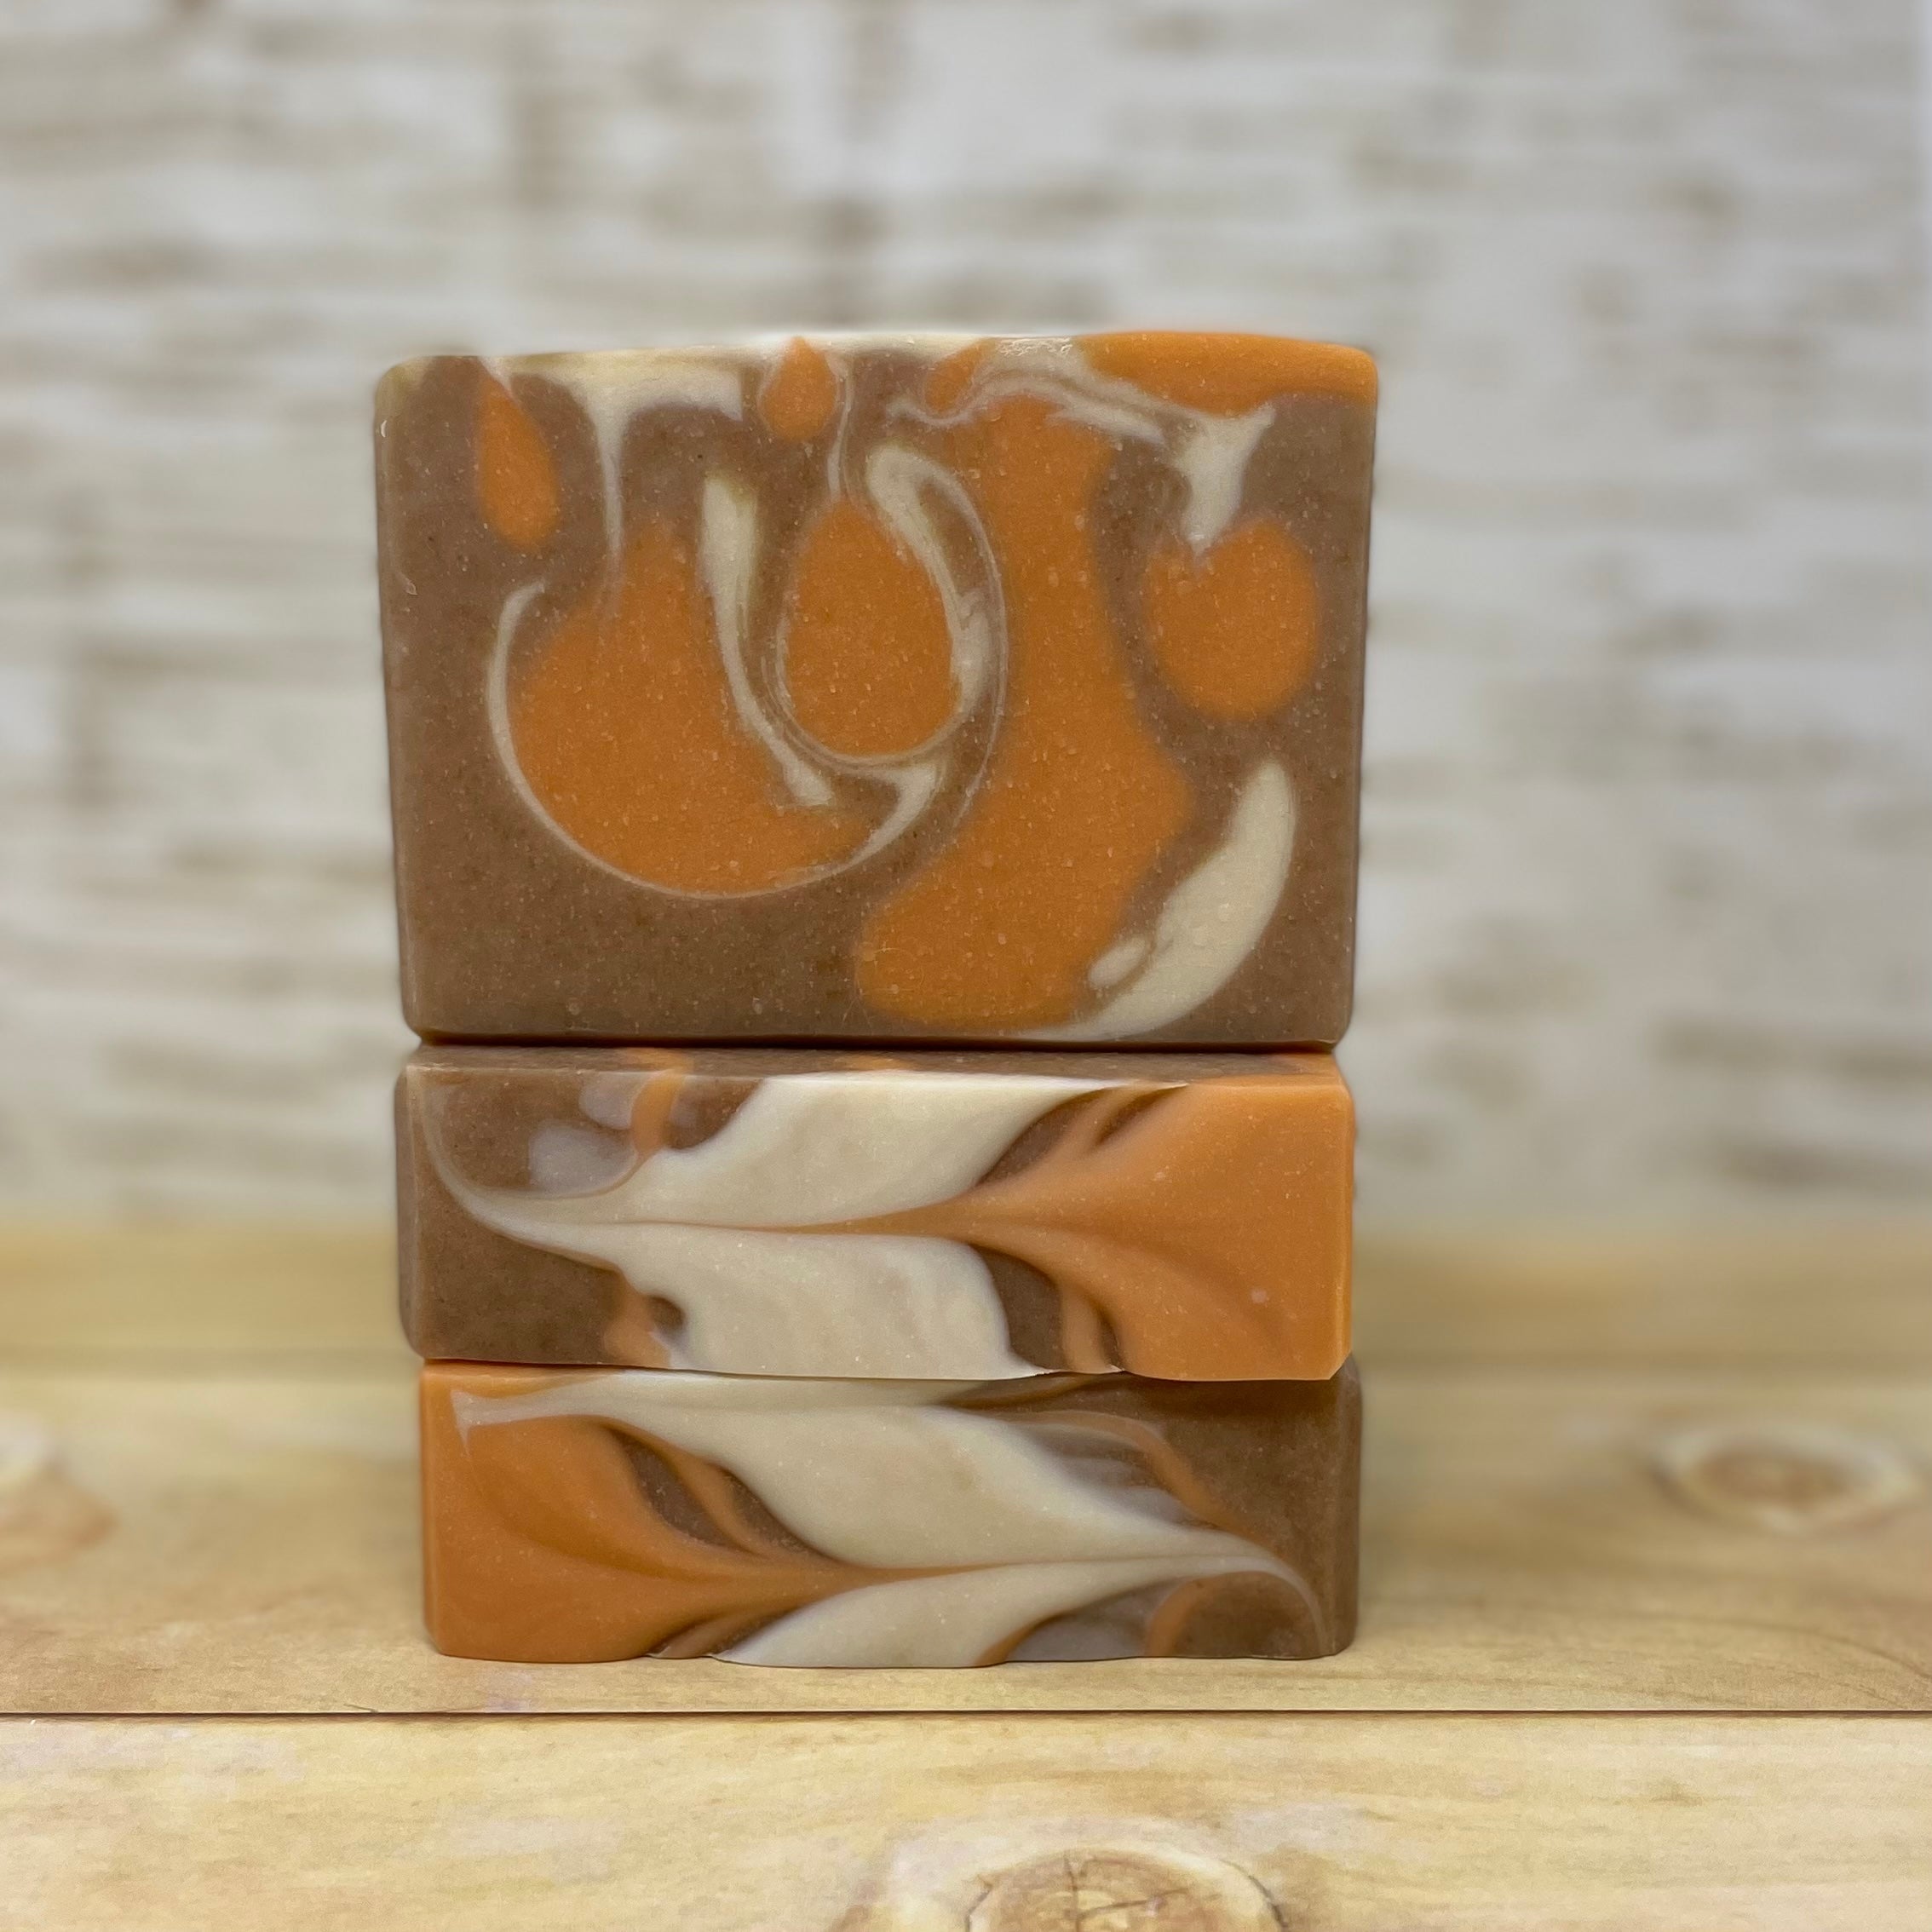 Pumpkin Spiced Latte soap